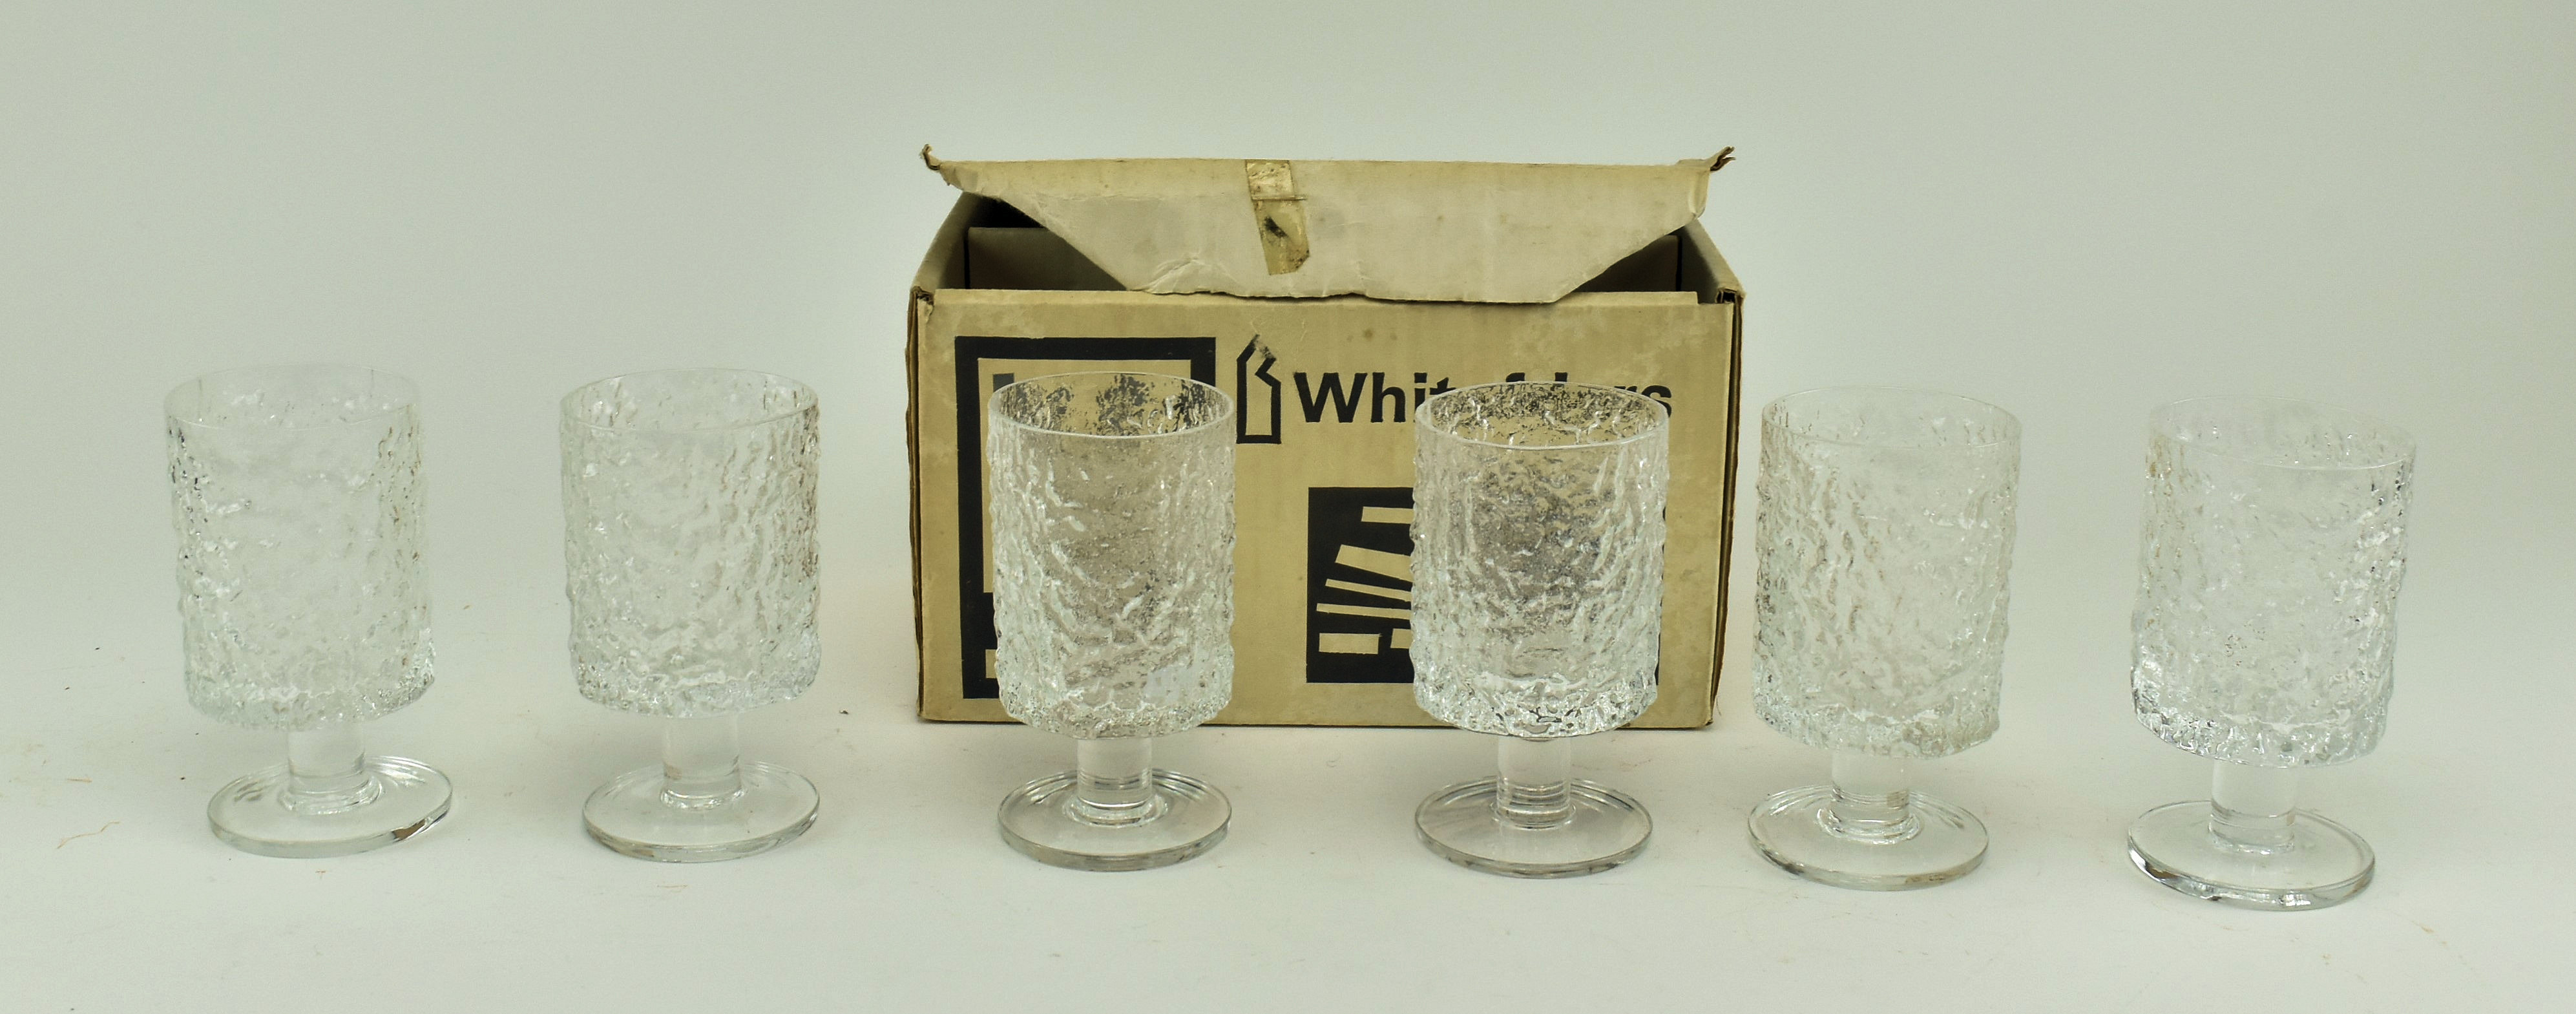 WHITEFRIARS - SIX VINTAGE GLACIER WINE GLASSES IN ORIG. BOX - Image 2 of 6